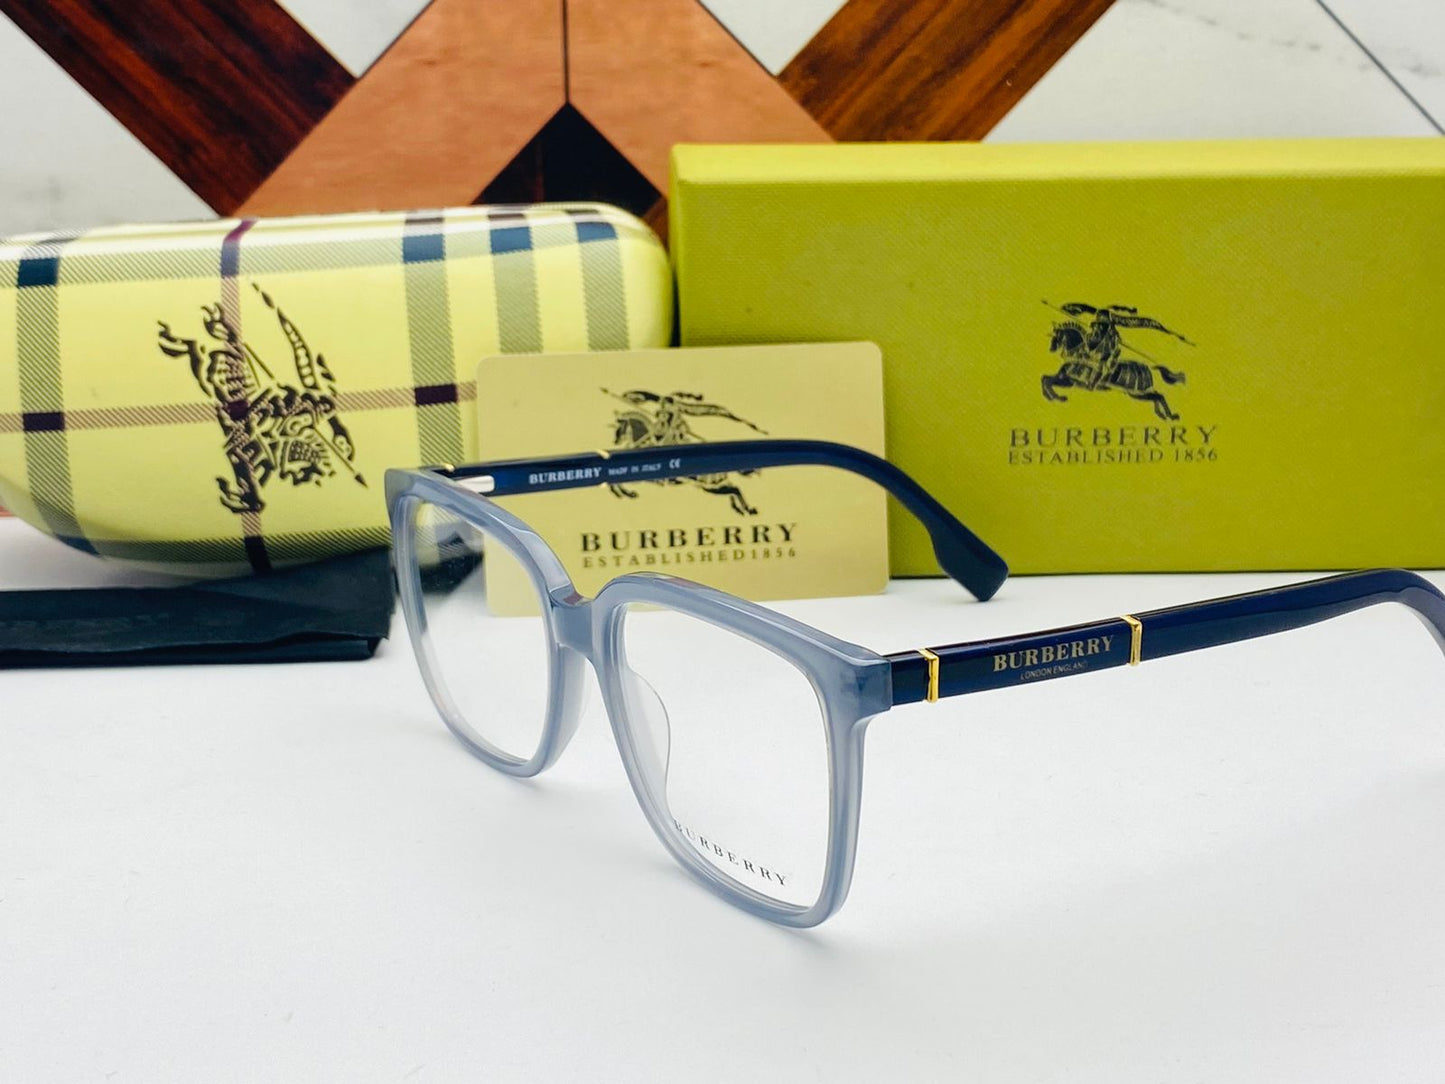 Burberry London Glasses